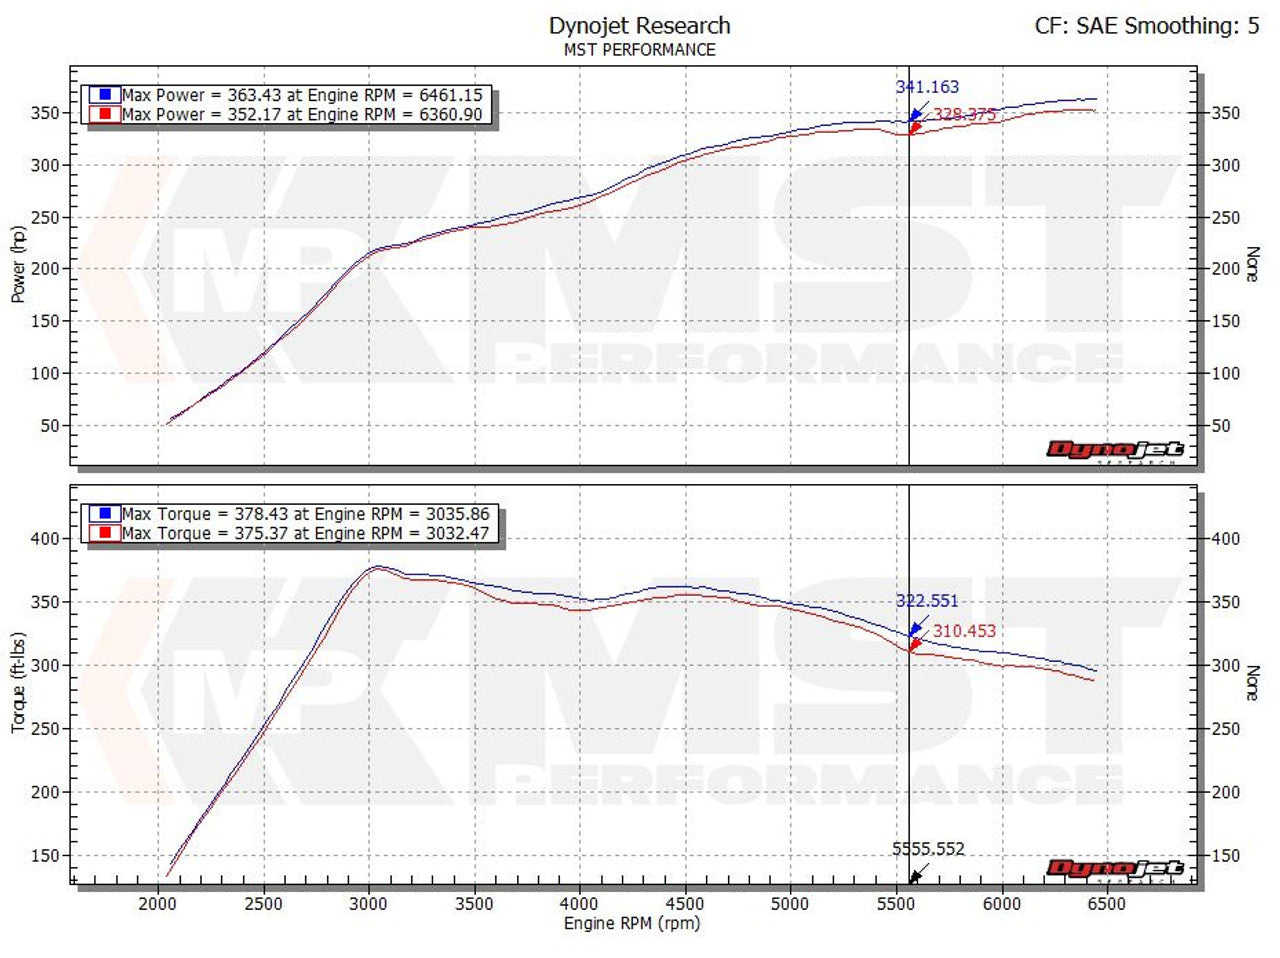 MST Performance Intake Hose & Oversize Turbo Inlet - Skoda Superb 3V 1.8/2.0 TSI (EA888)